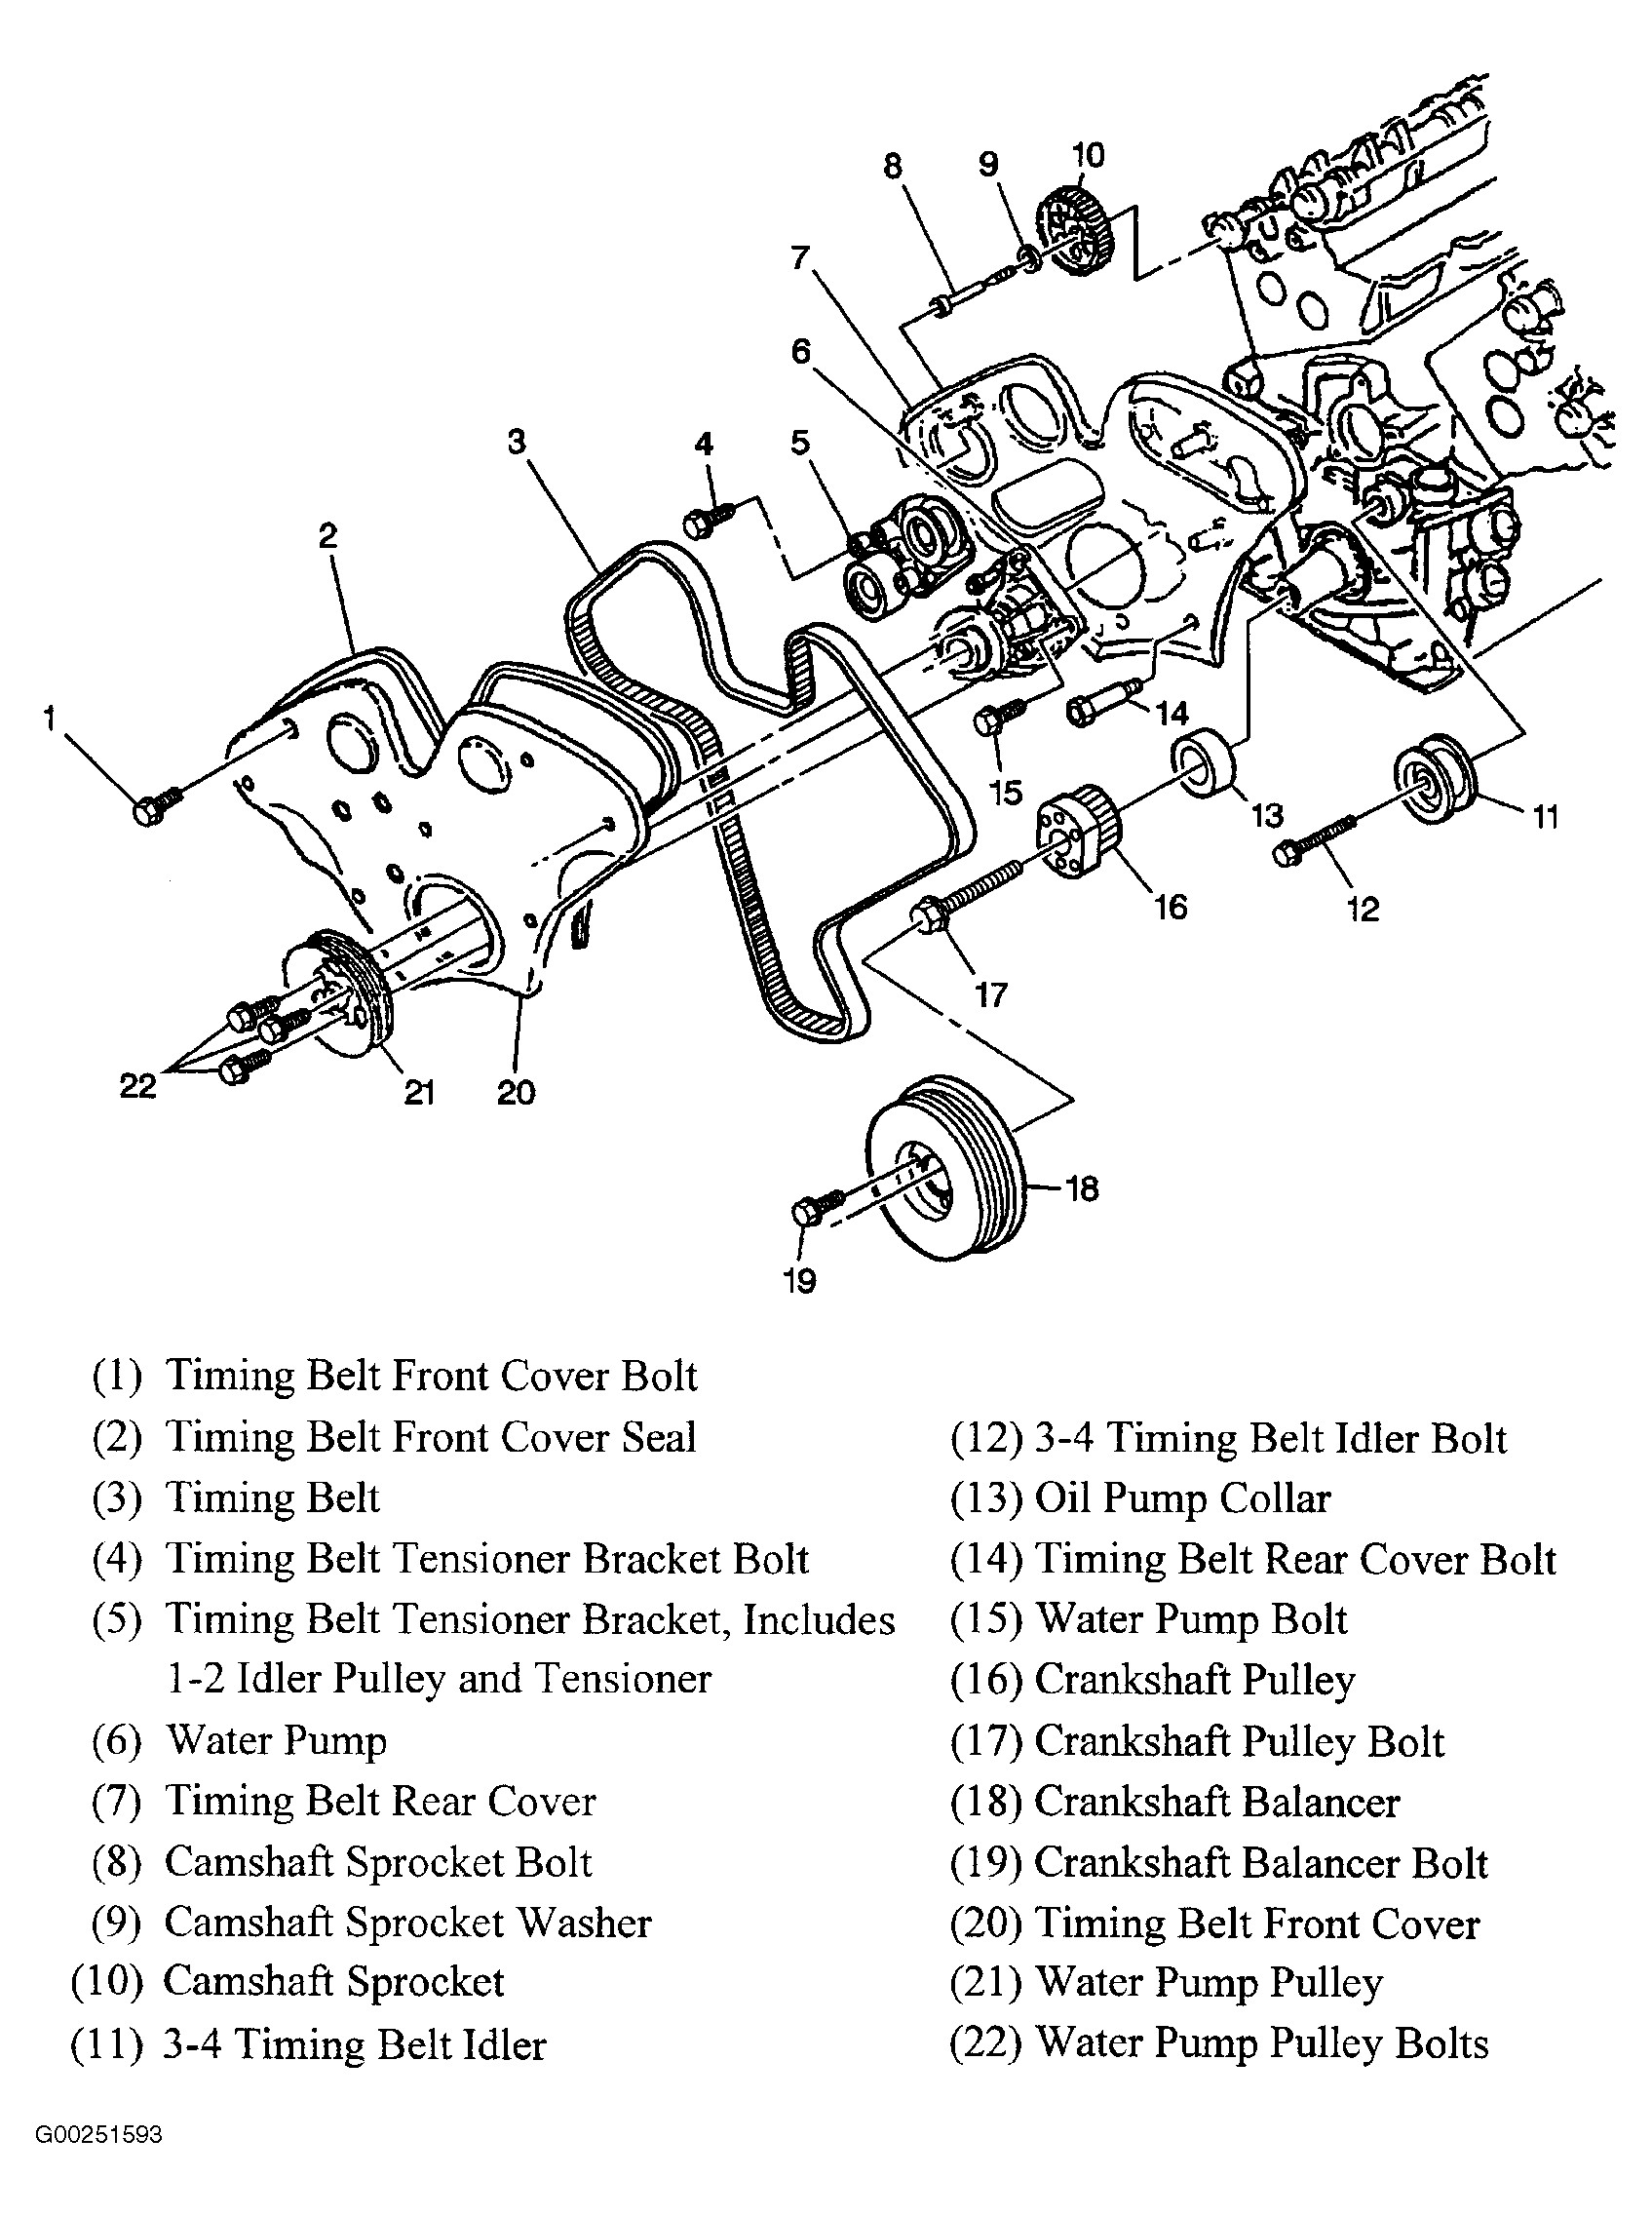 Engine Diagram Gif 2003 Cadillac Cts Serpentine Belt Diagram Auto Of Engine Diagram Gif